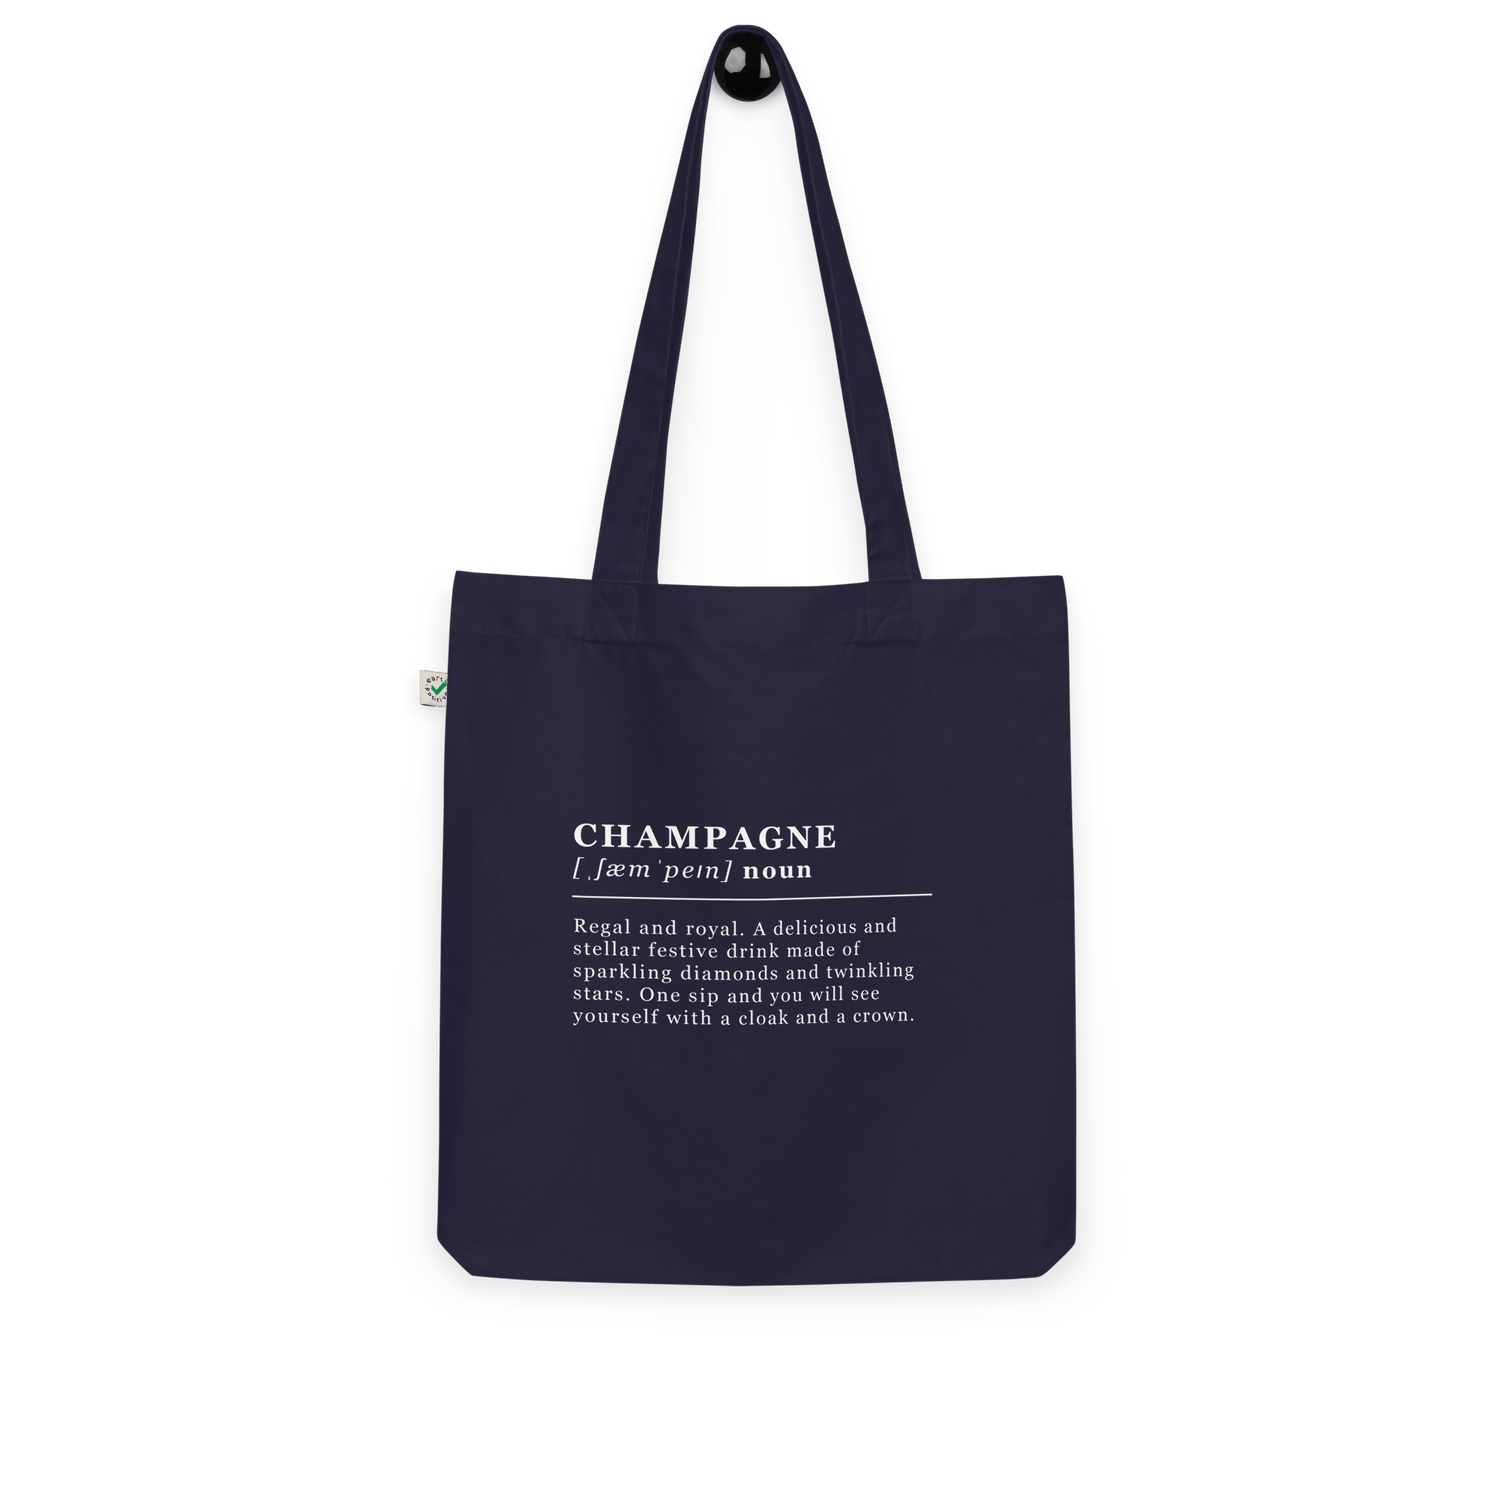 The Champagne Organic tote bag